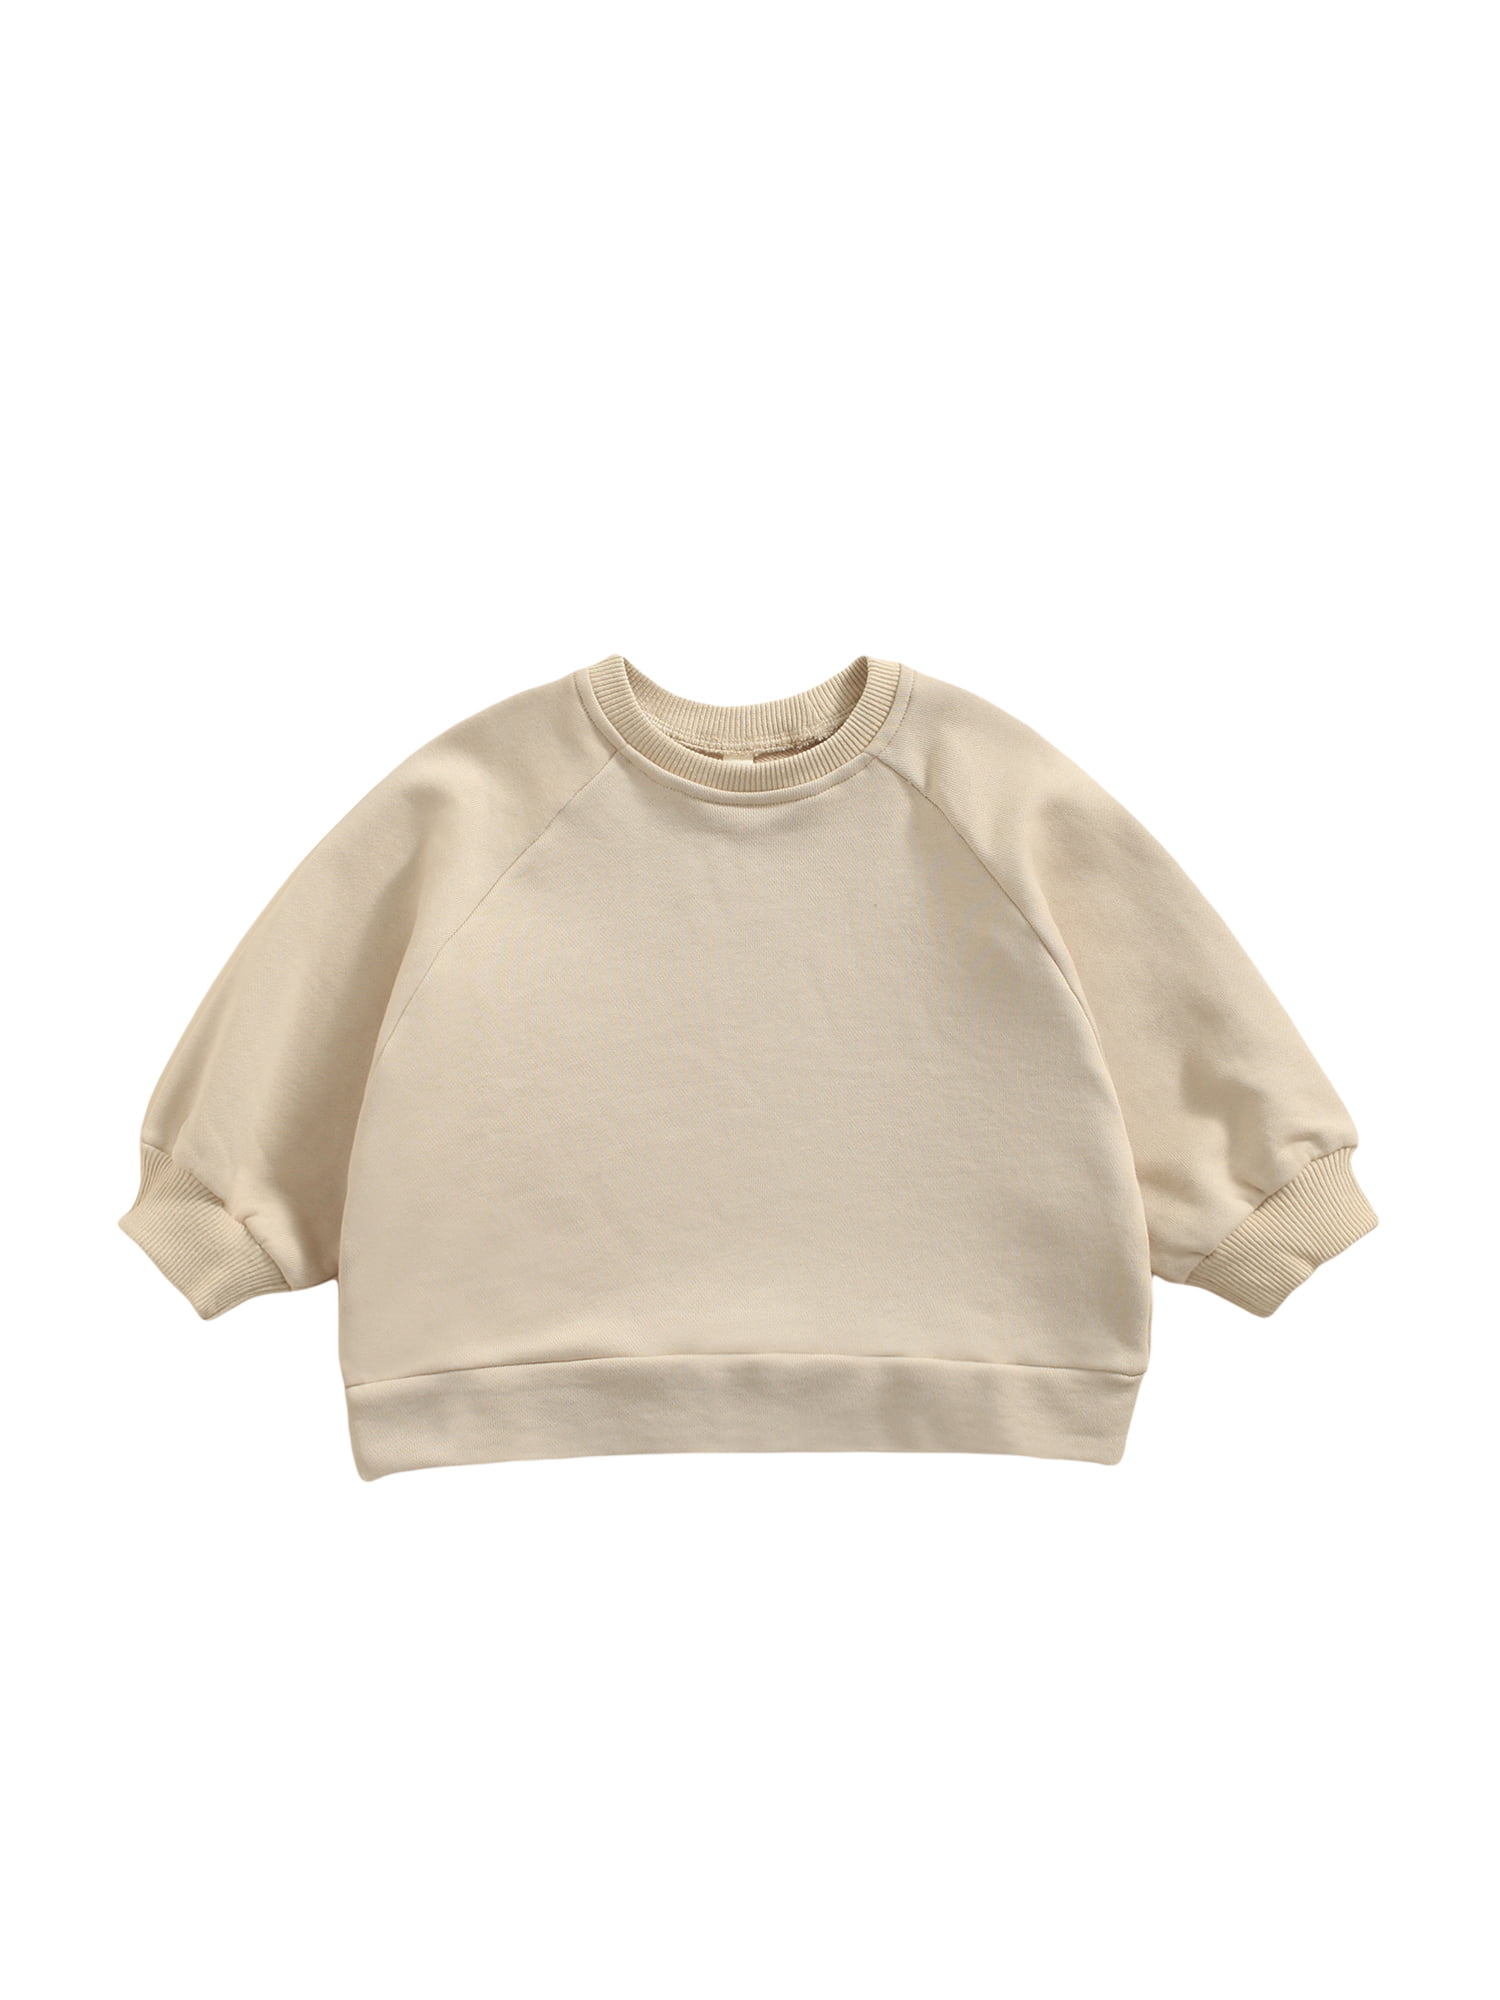 Soft & Warm Hand Knit Baby Girl's Raglan Sleeve Pullover Sweater w/ Hearts